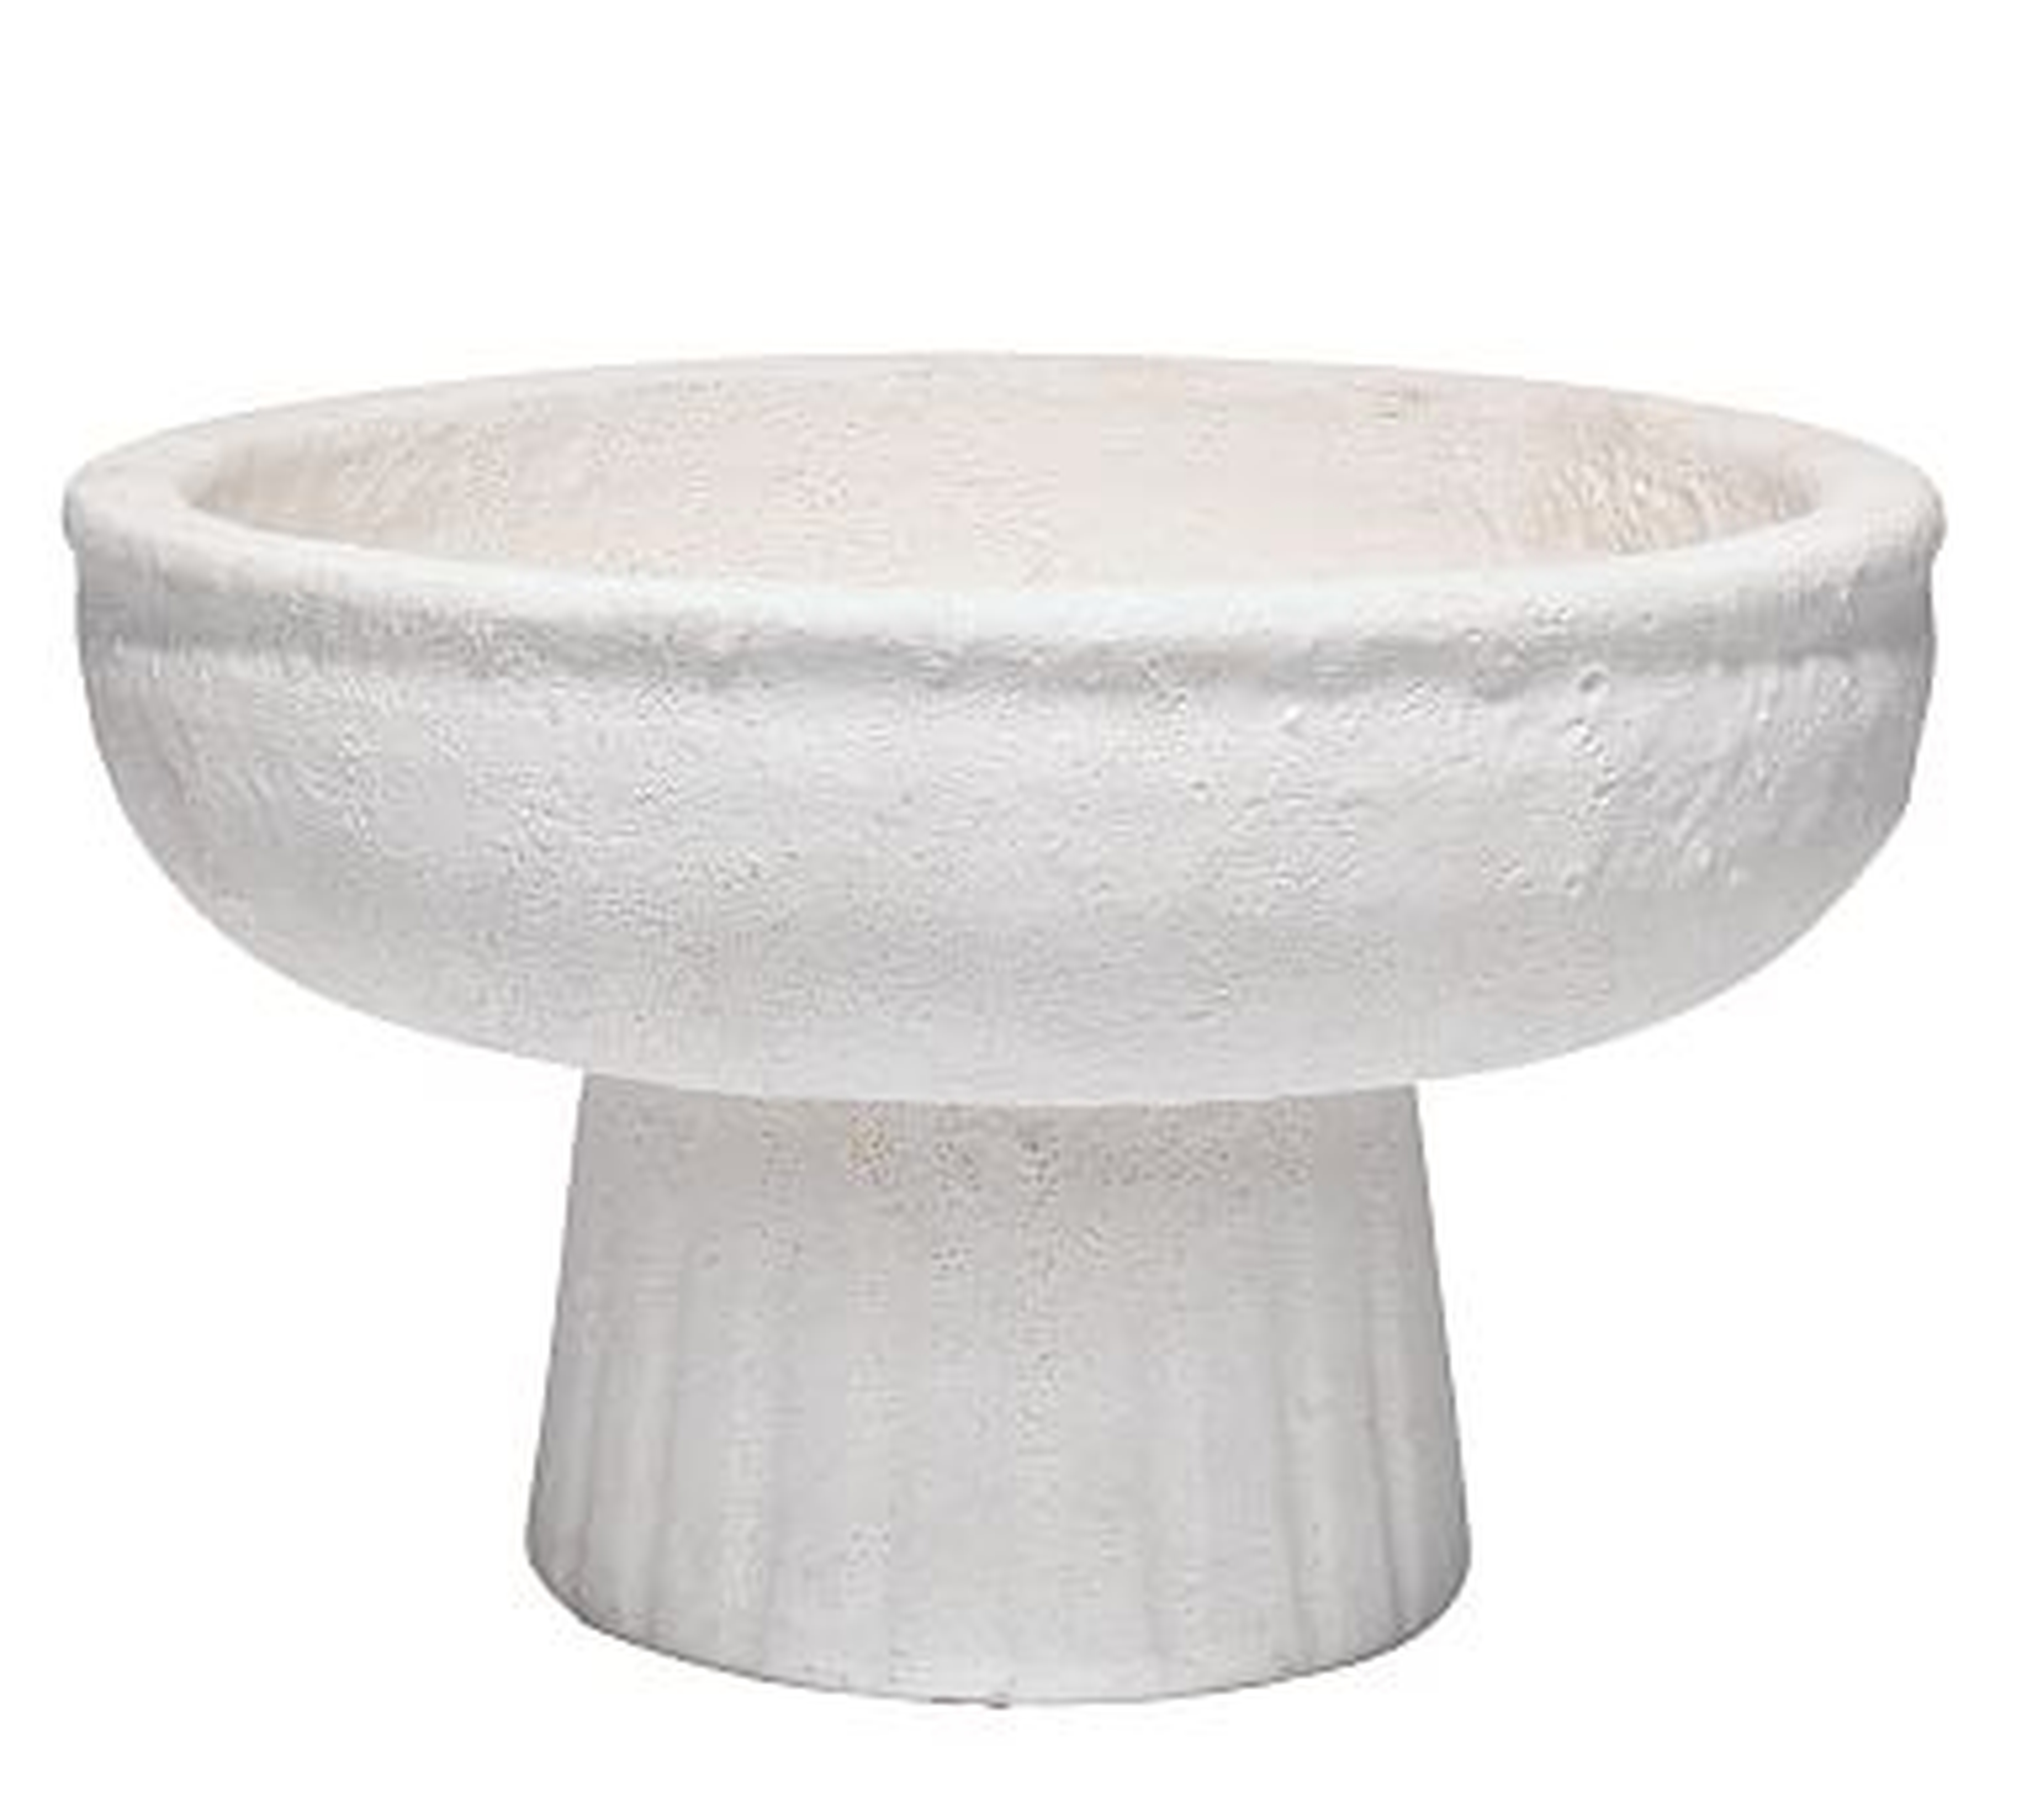 Ensley Pedestal Vase, Small, White - Pottery Barn